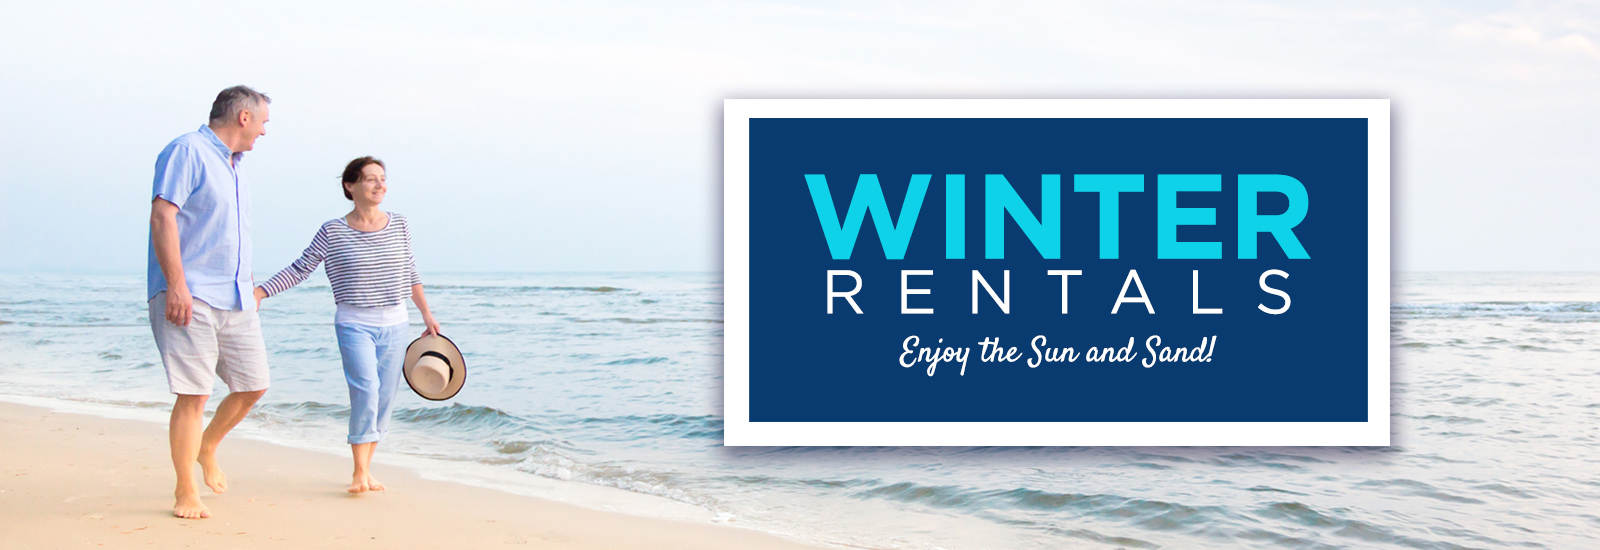 Winter Rentals - Enjoy the Sun and Sand!